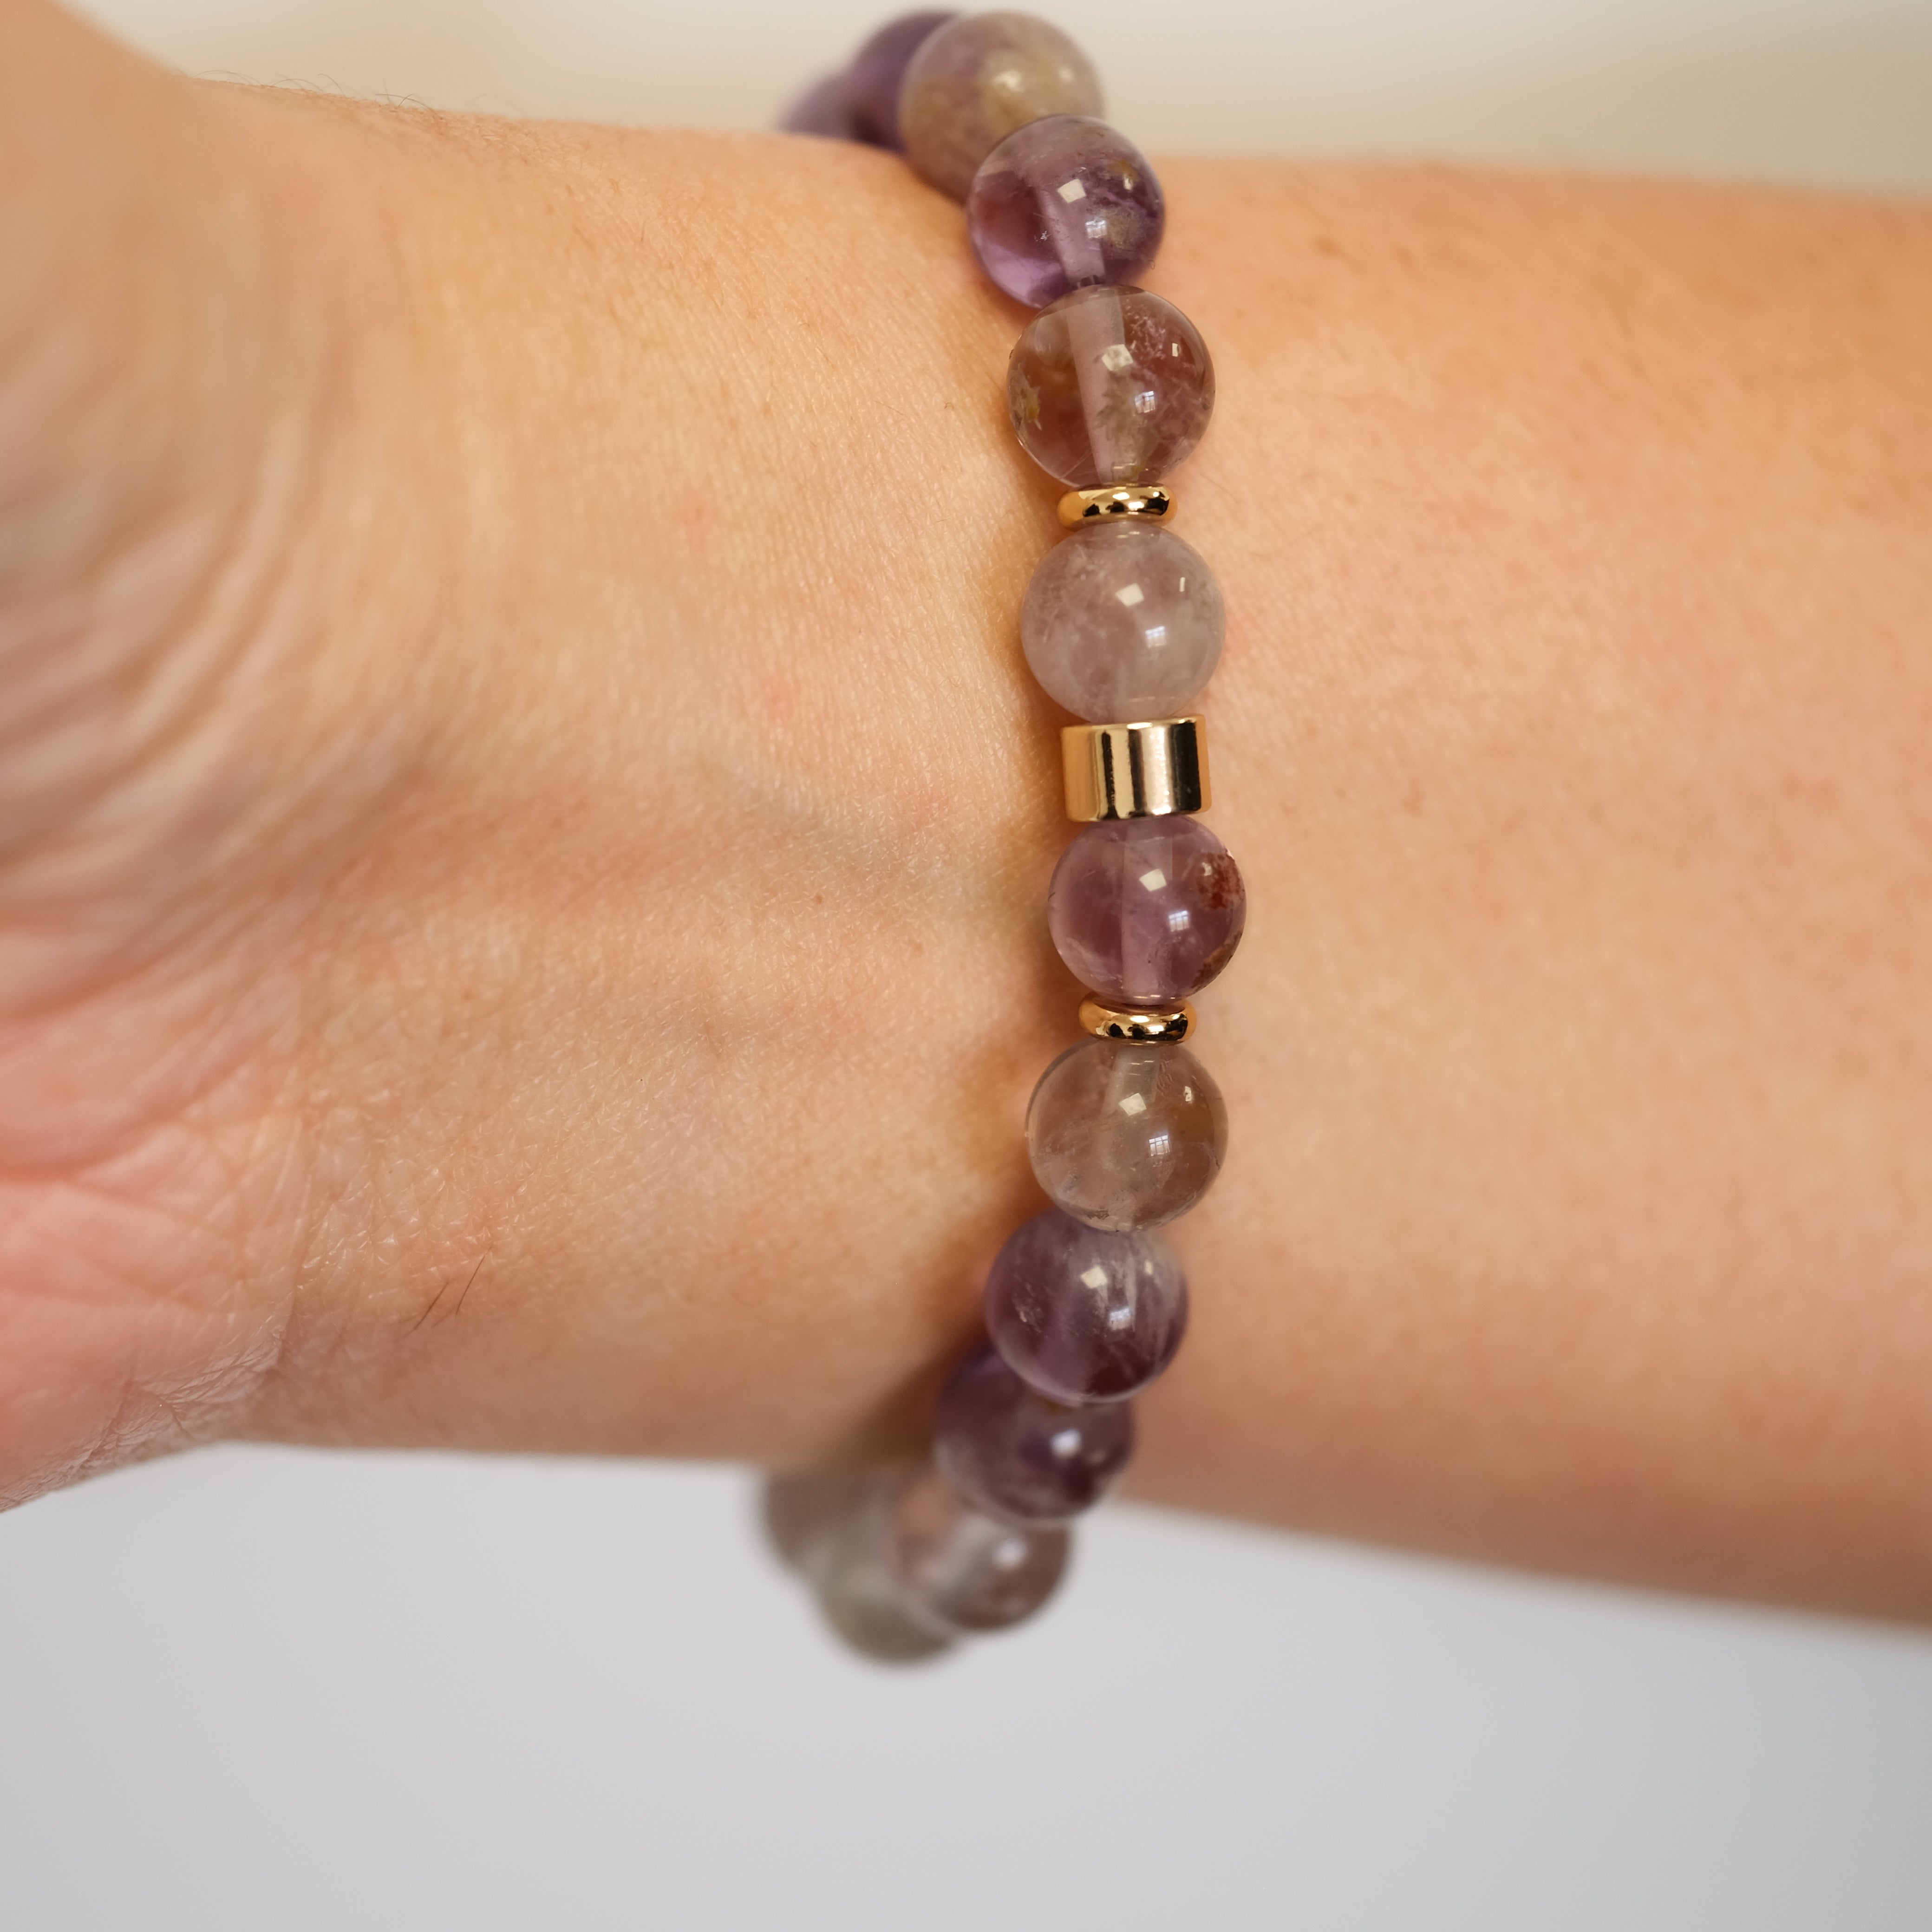 A phantom amethyst gemstone bracelet in 8mm beads worn on a model's wrist from behind